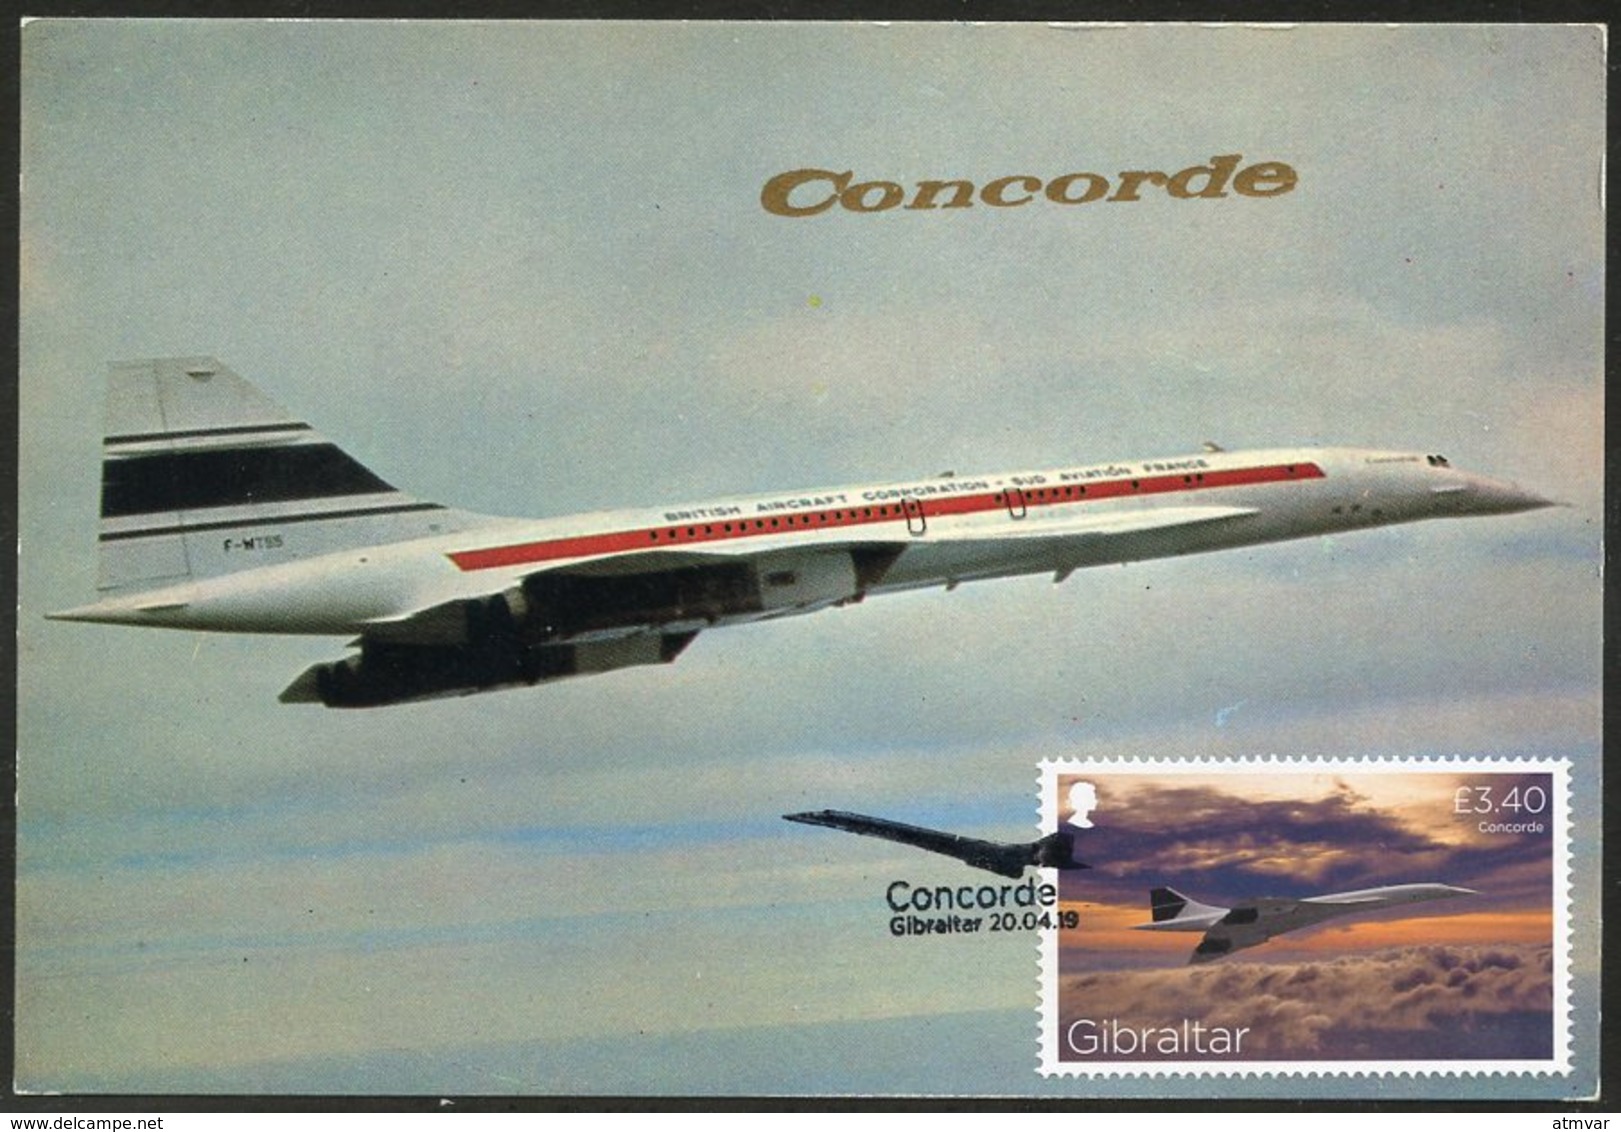 GIBRALTAR (2019). Carte Maximum Card - Concorde, 50th Anniversary - Supersonic Airplane, Avion, Aérospatiale-BAC - Concorde